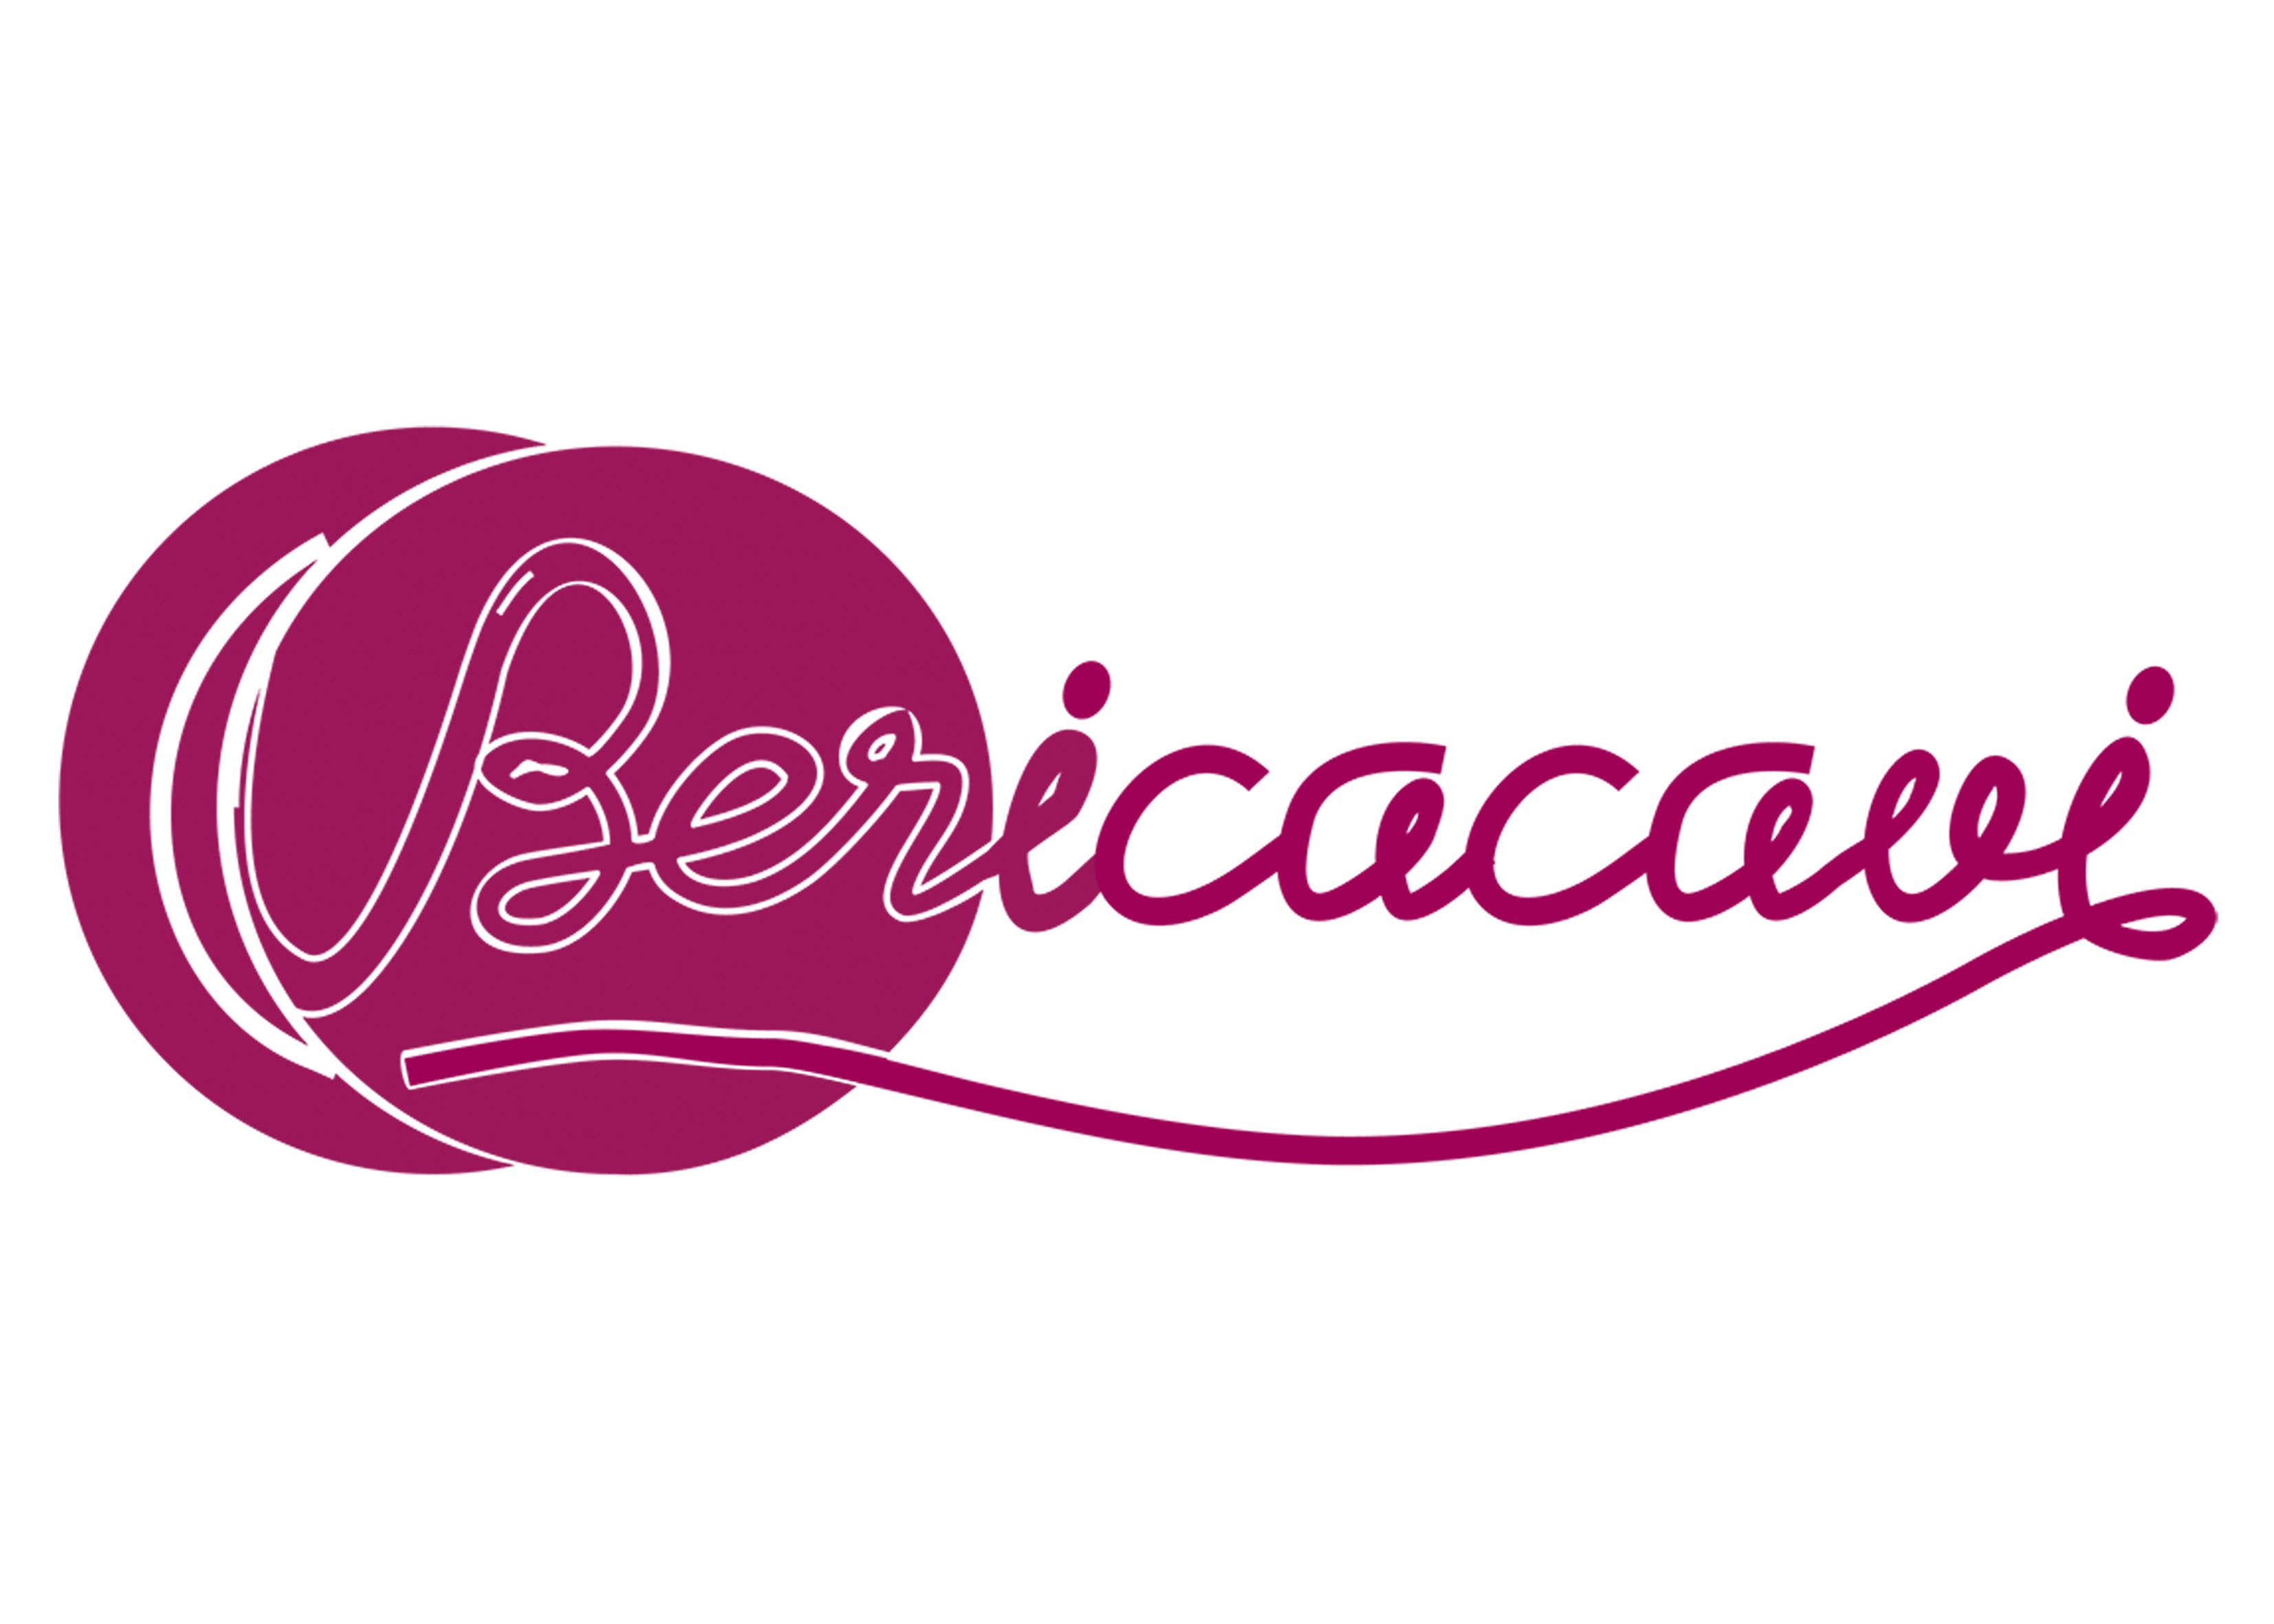 www.bericacavi.it